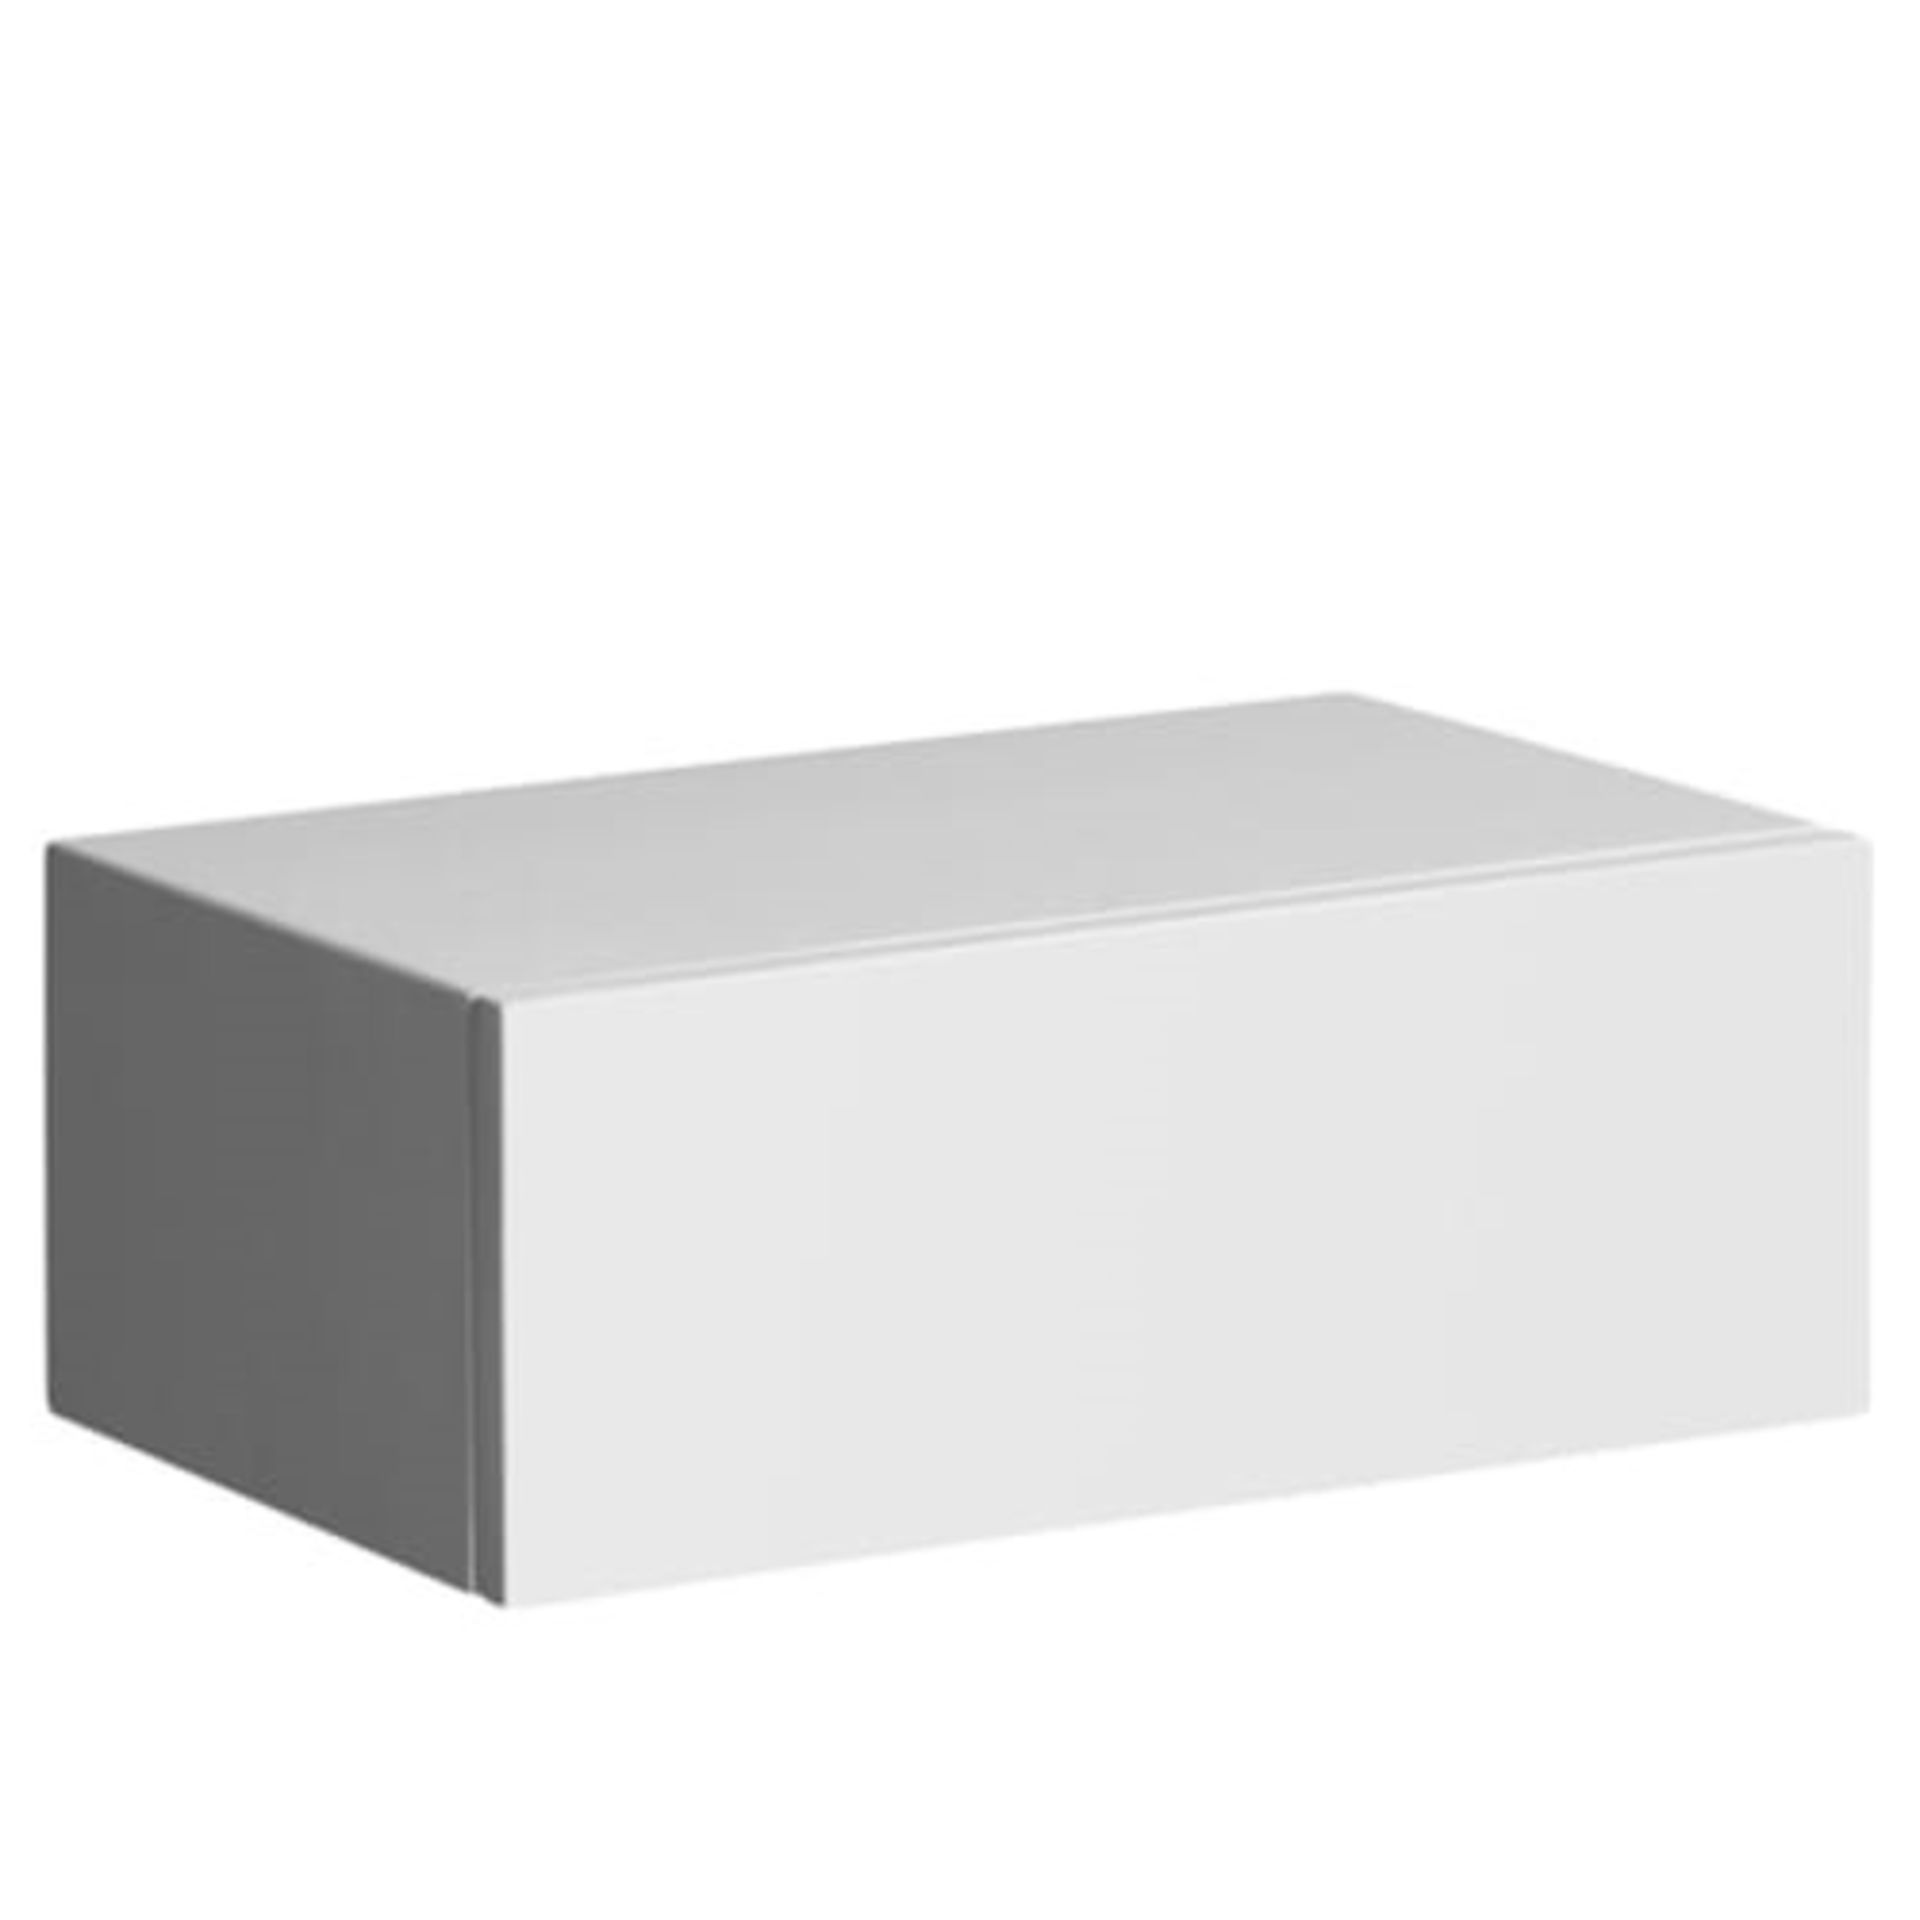 1 GRADE B BOXED DESIGNER VESPER 1 DRAWER SHELF UNIT IN WHITE / RRP £65.00 (PUBLIC VIEWING